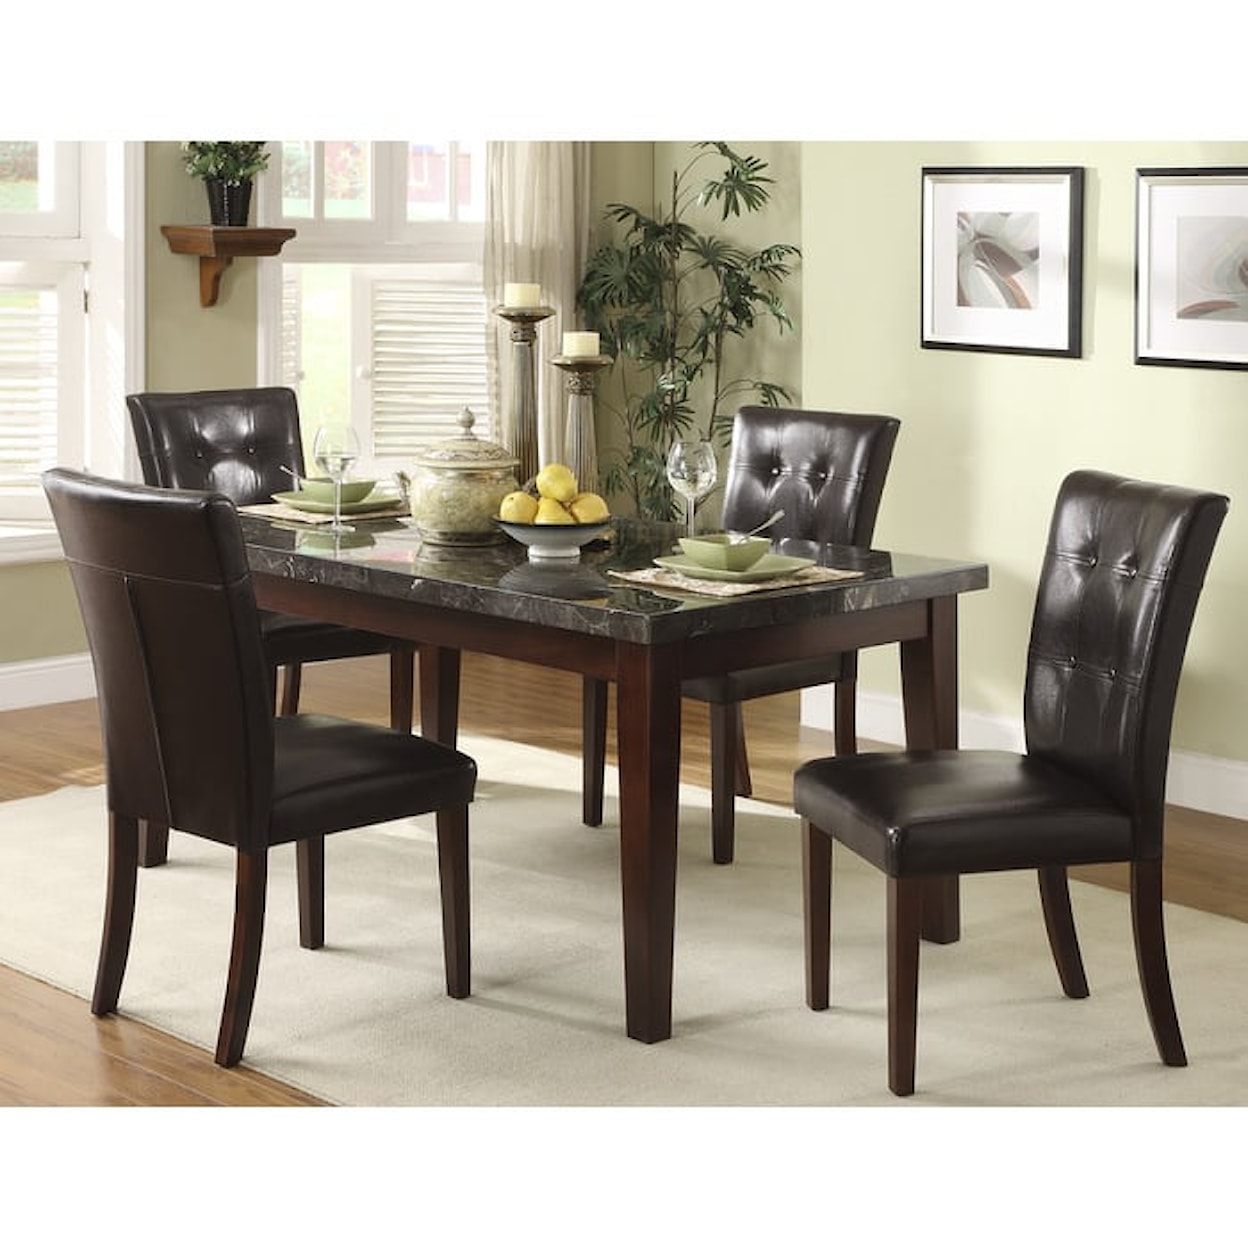 Homelegance Furniture Decatur Dining Table